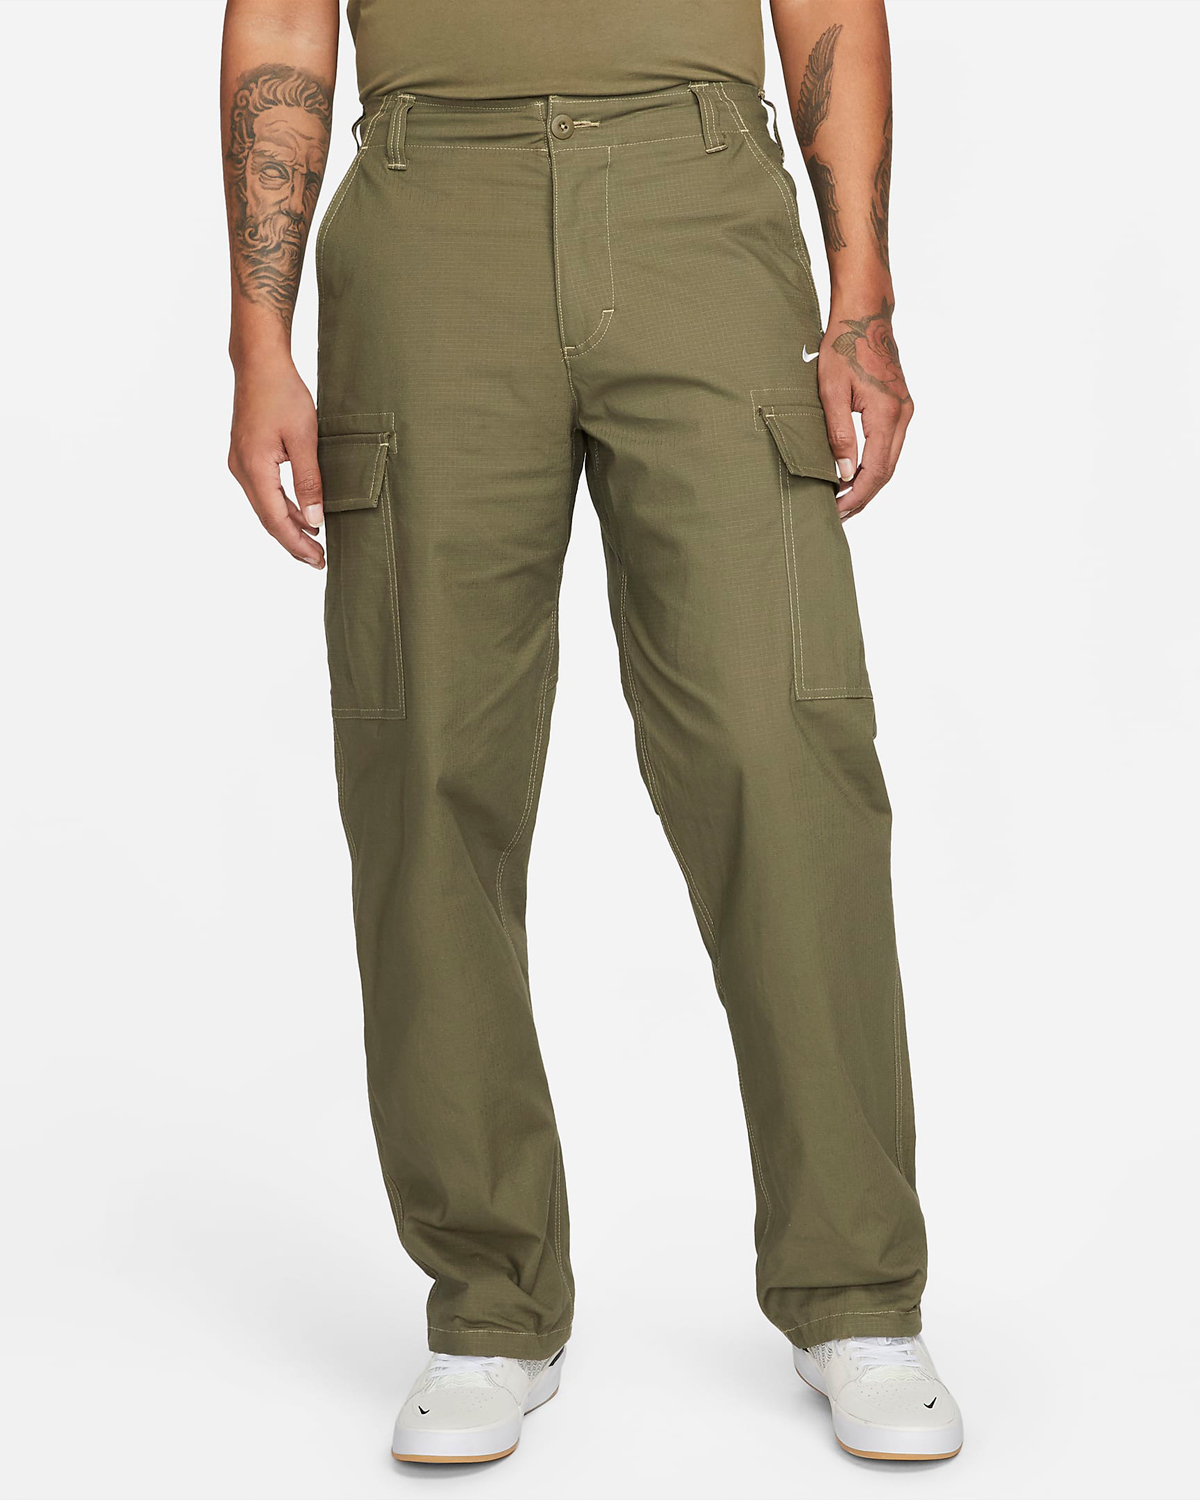 Nike-SB-Kearny-Cargo-Pants-Medium-Olive